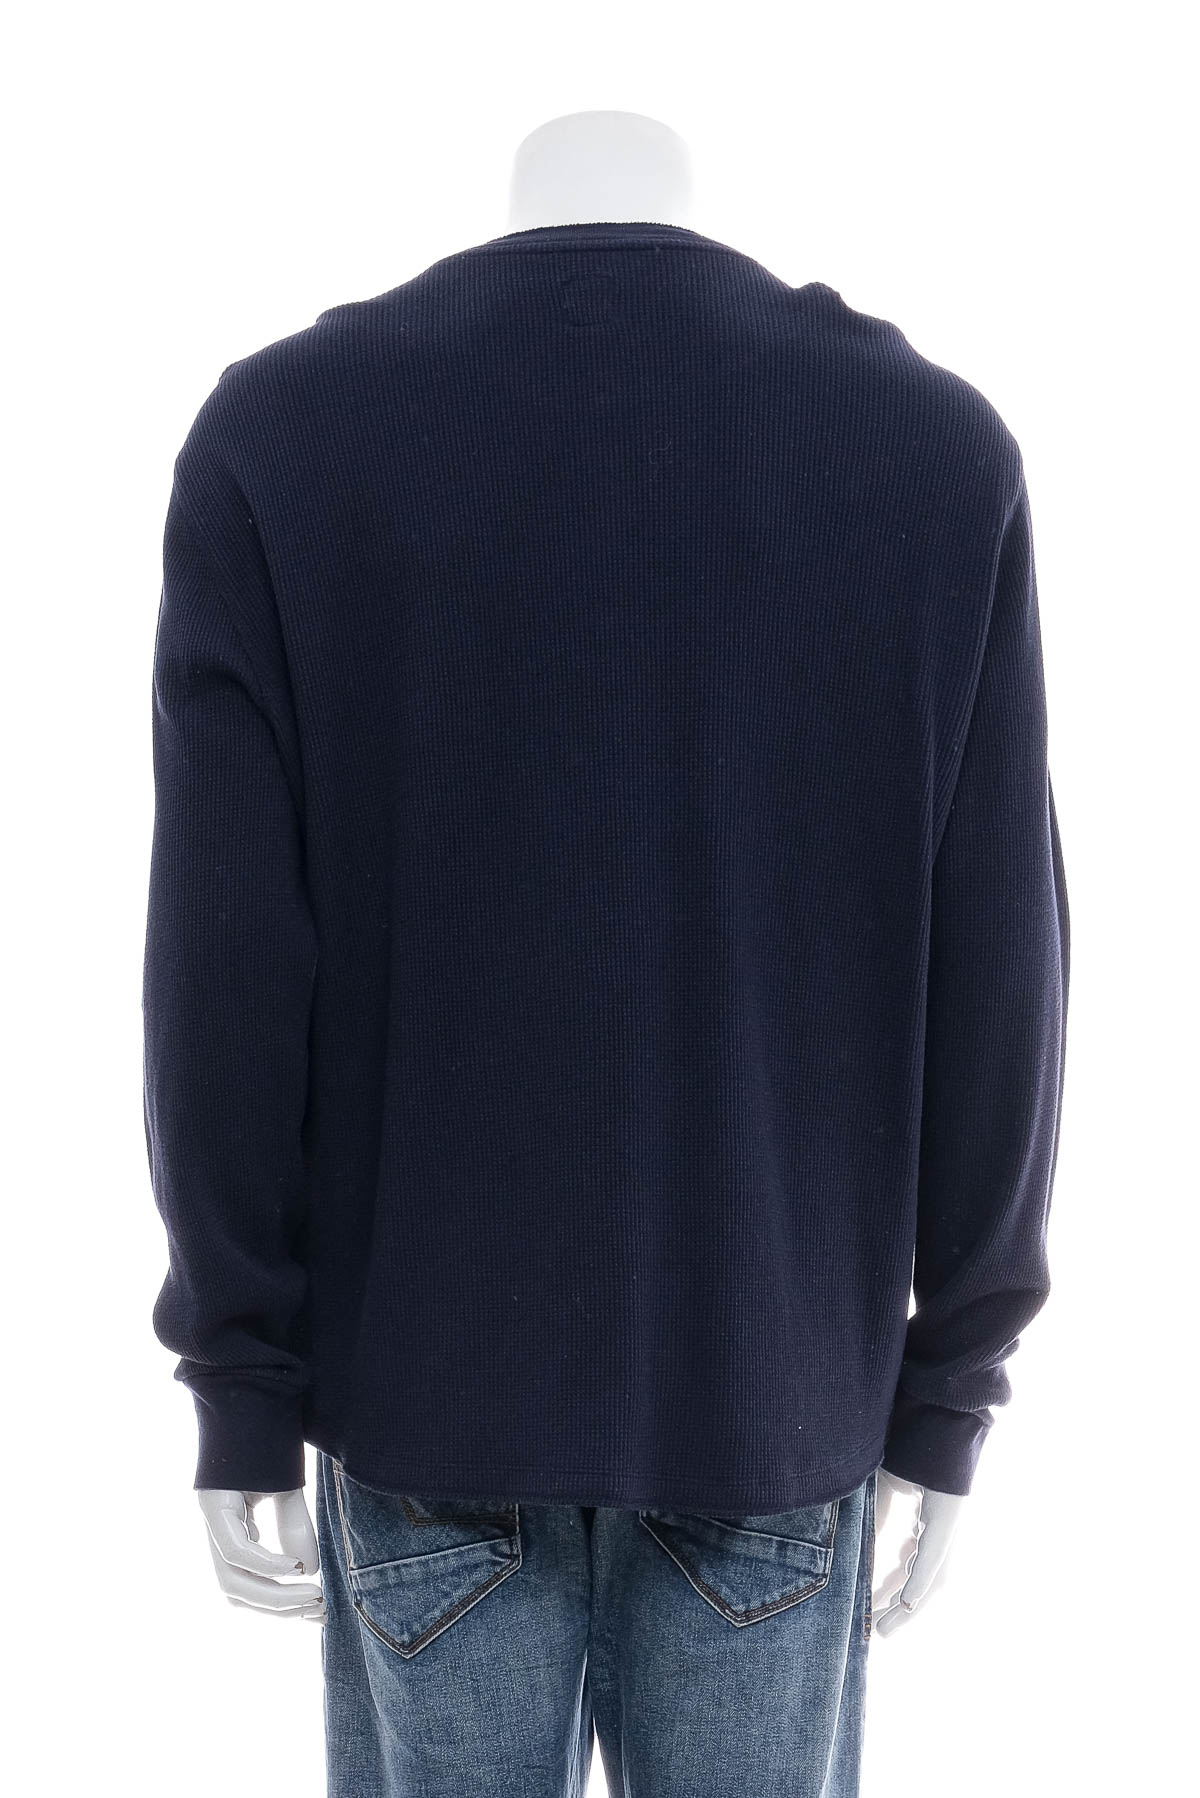 Men's sweater - GAP - 1